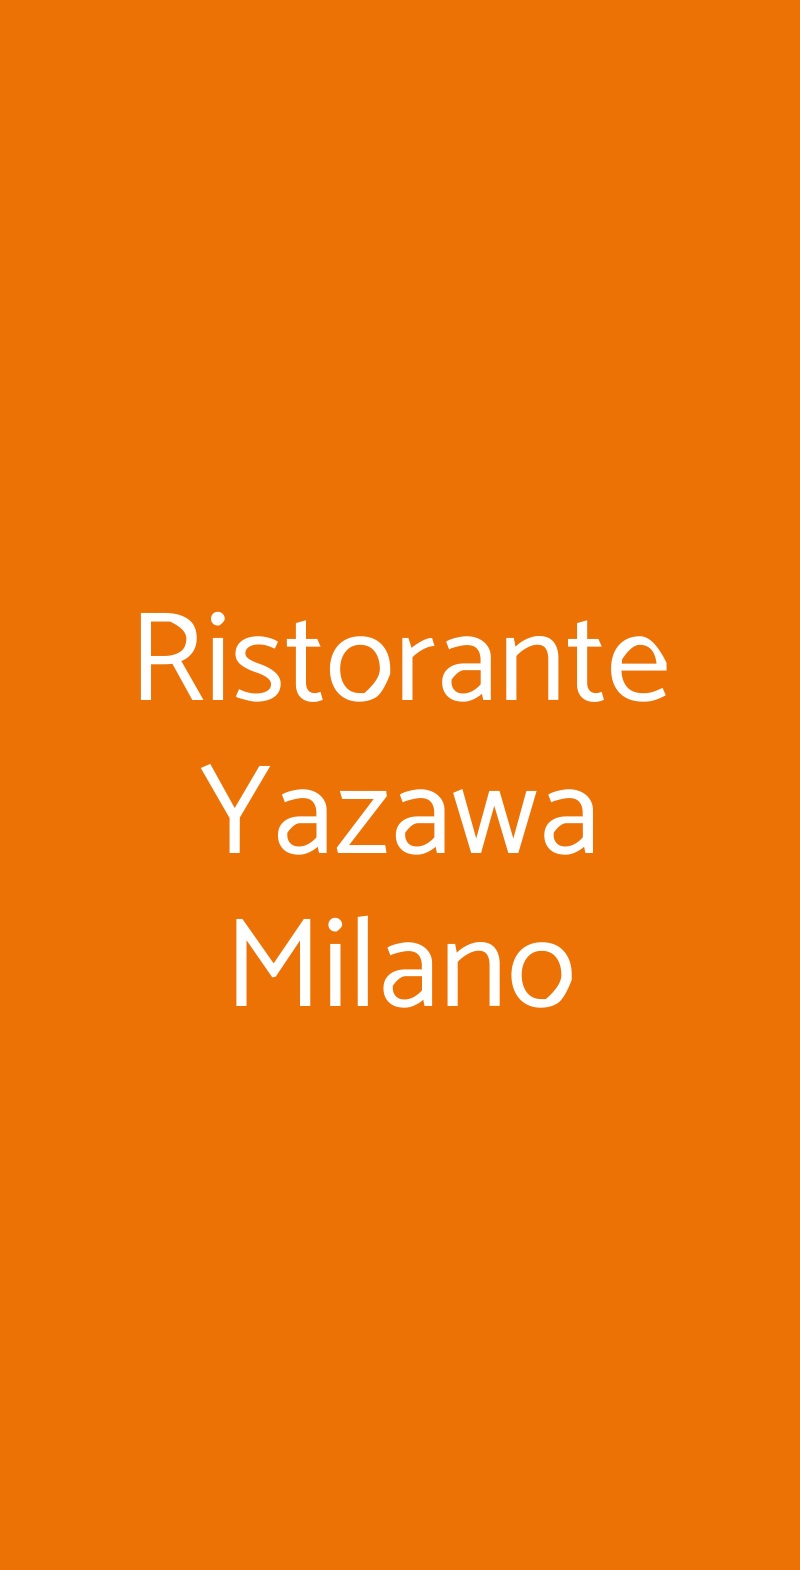 Ristorante Yazawa Milano Milano menù 1 pagina